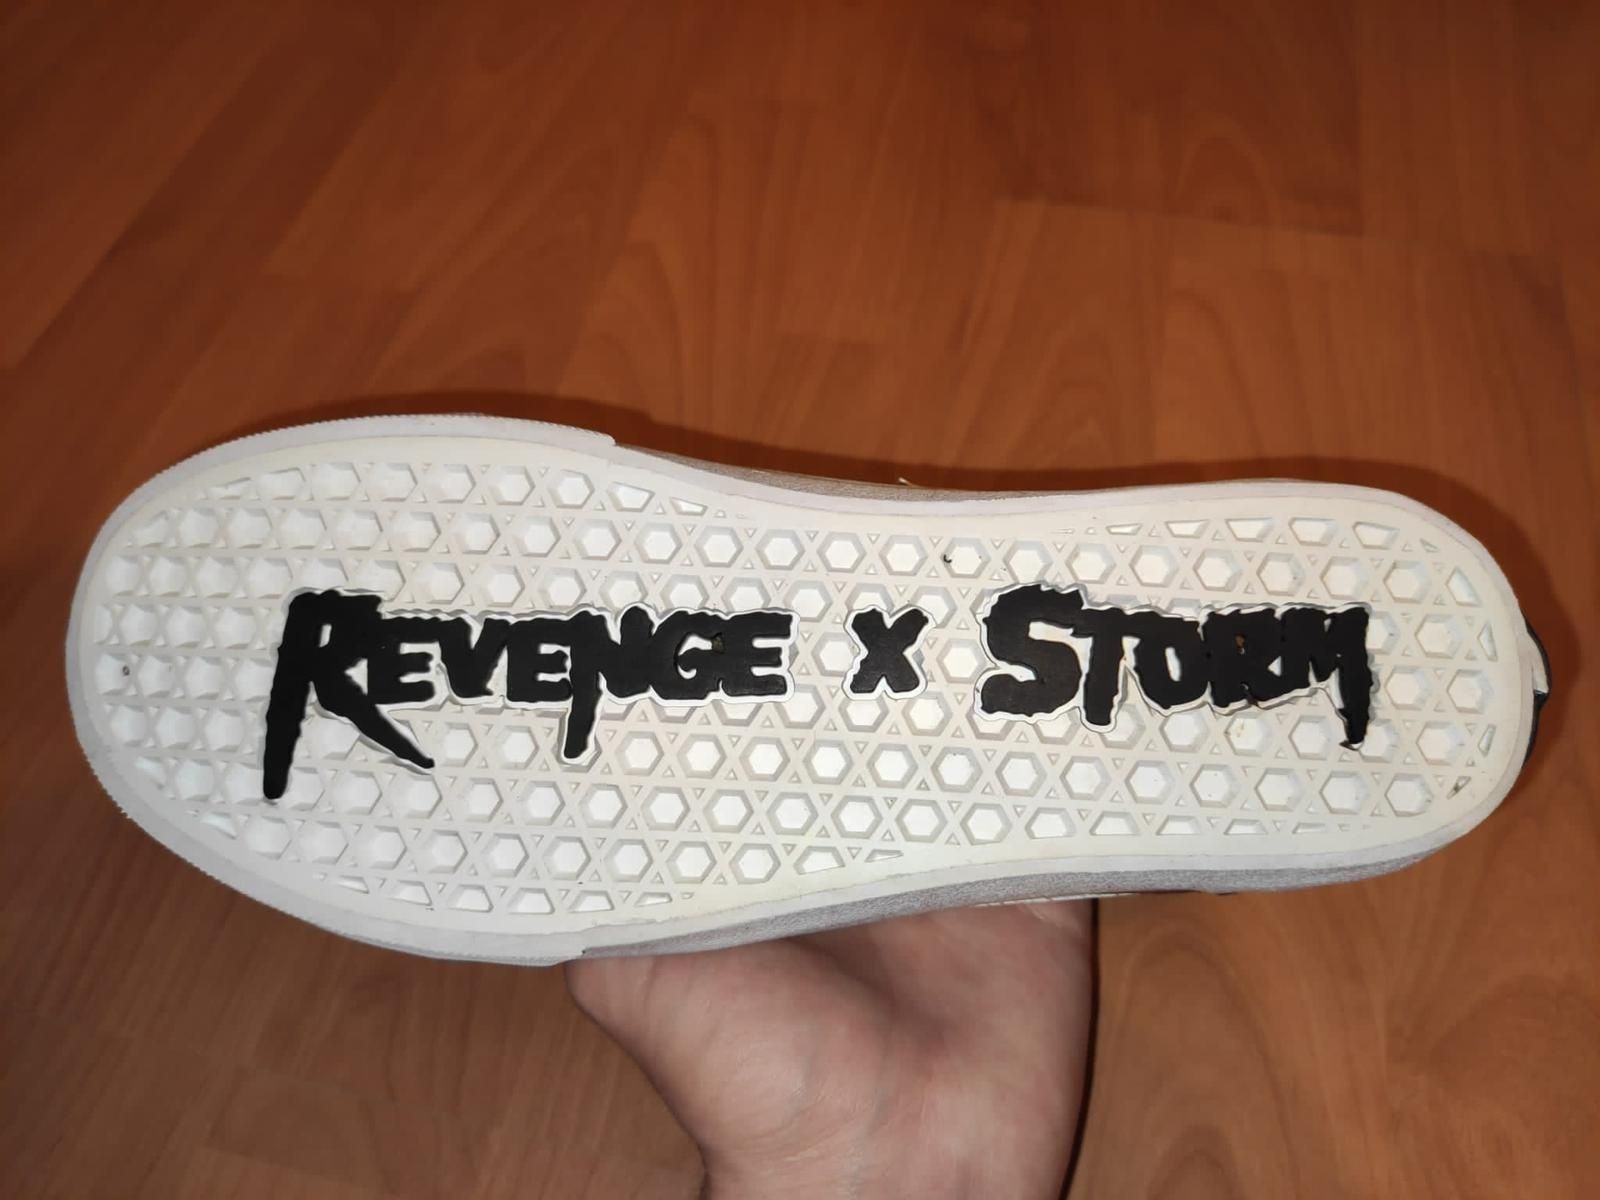 Adidasi Revenge x Storm Flame